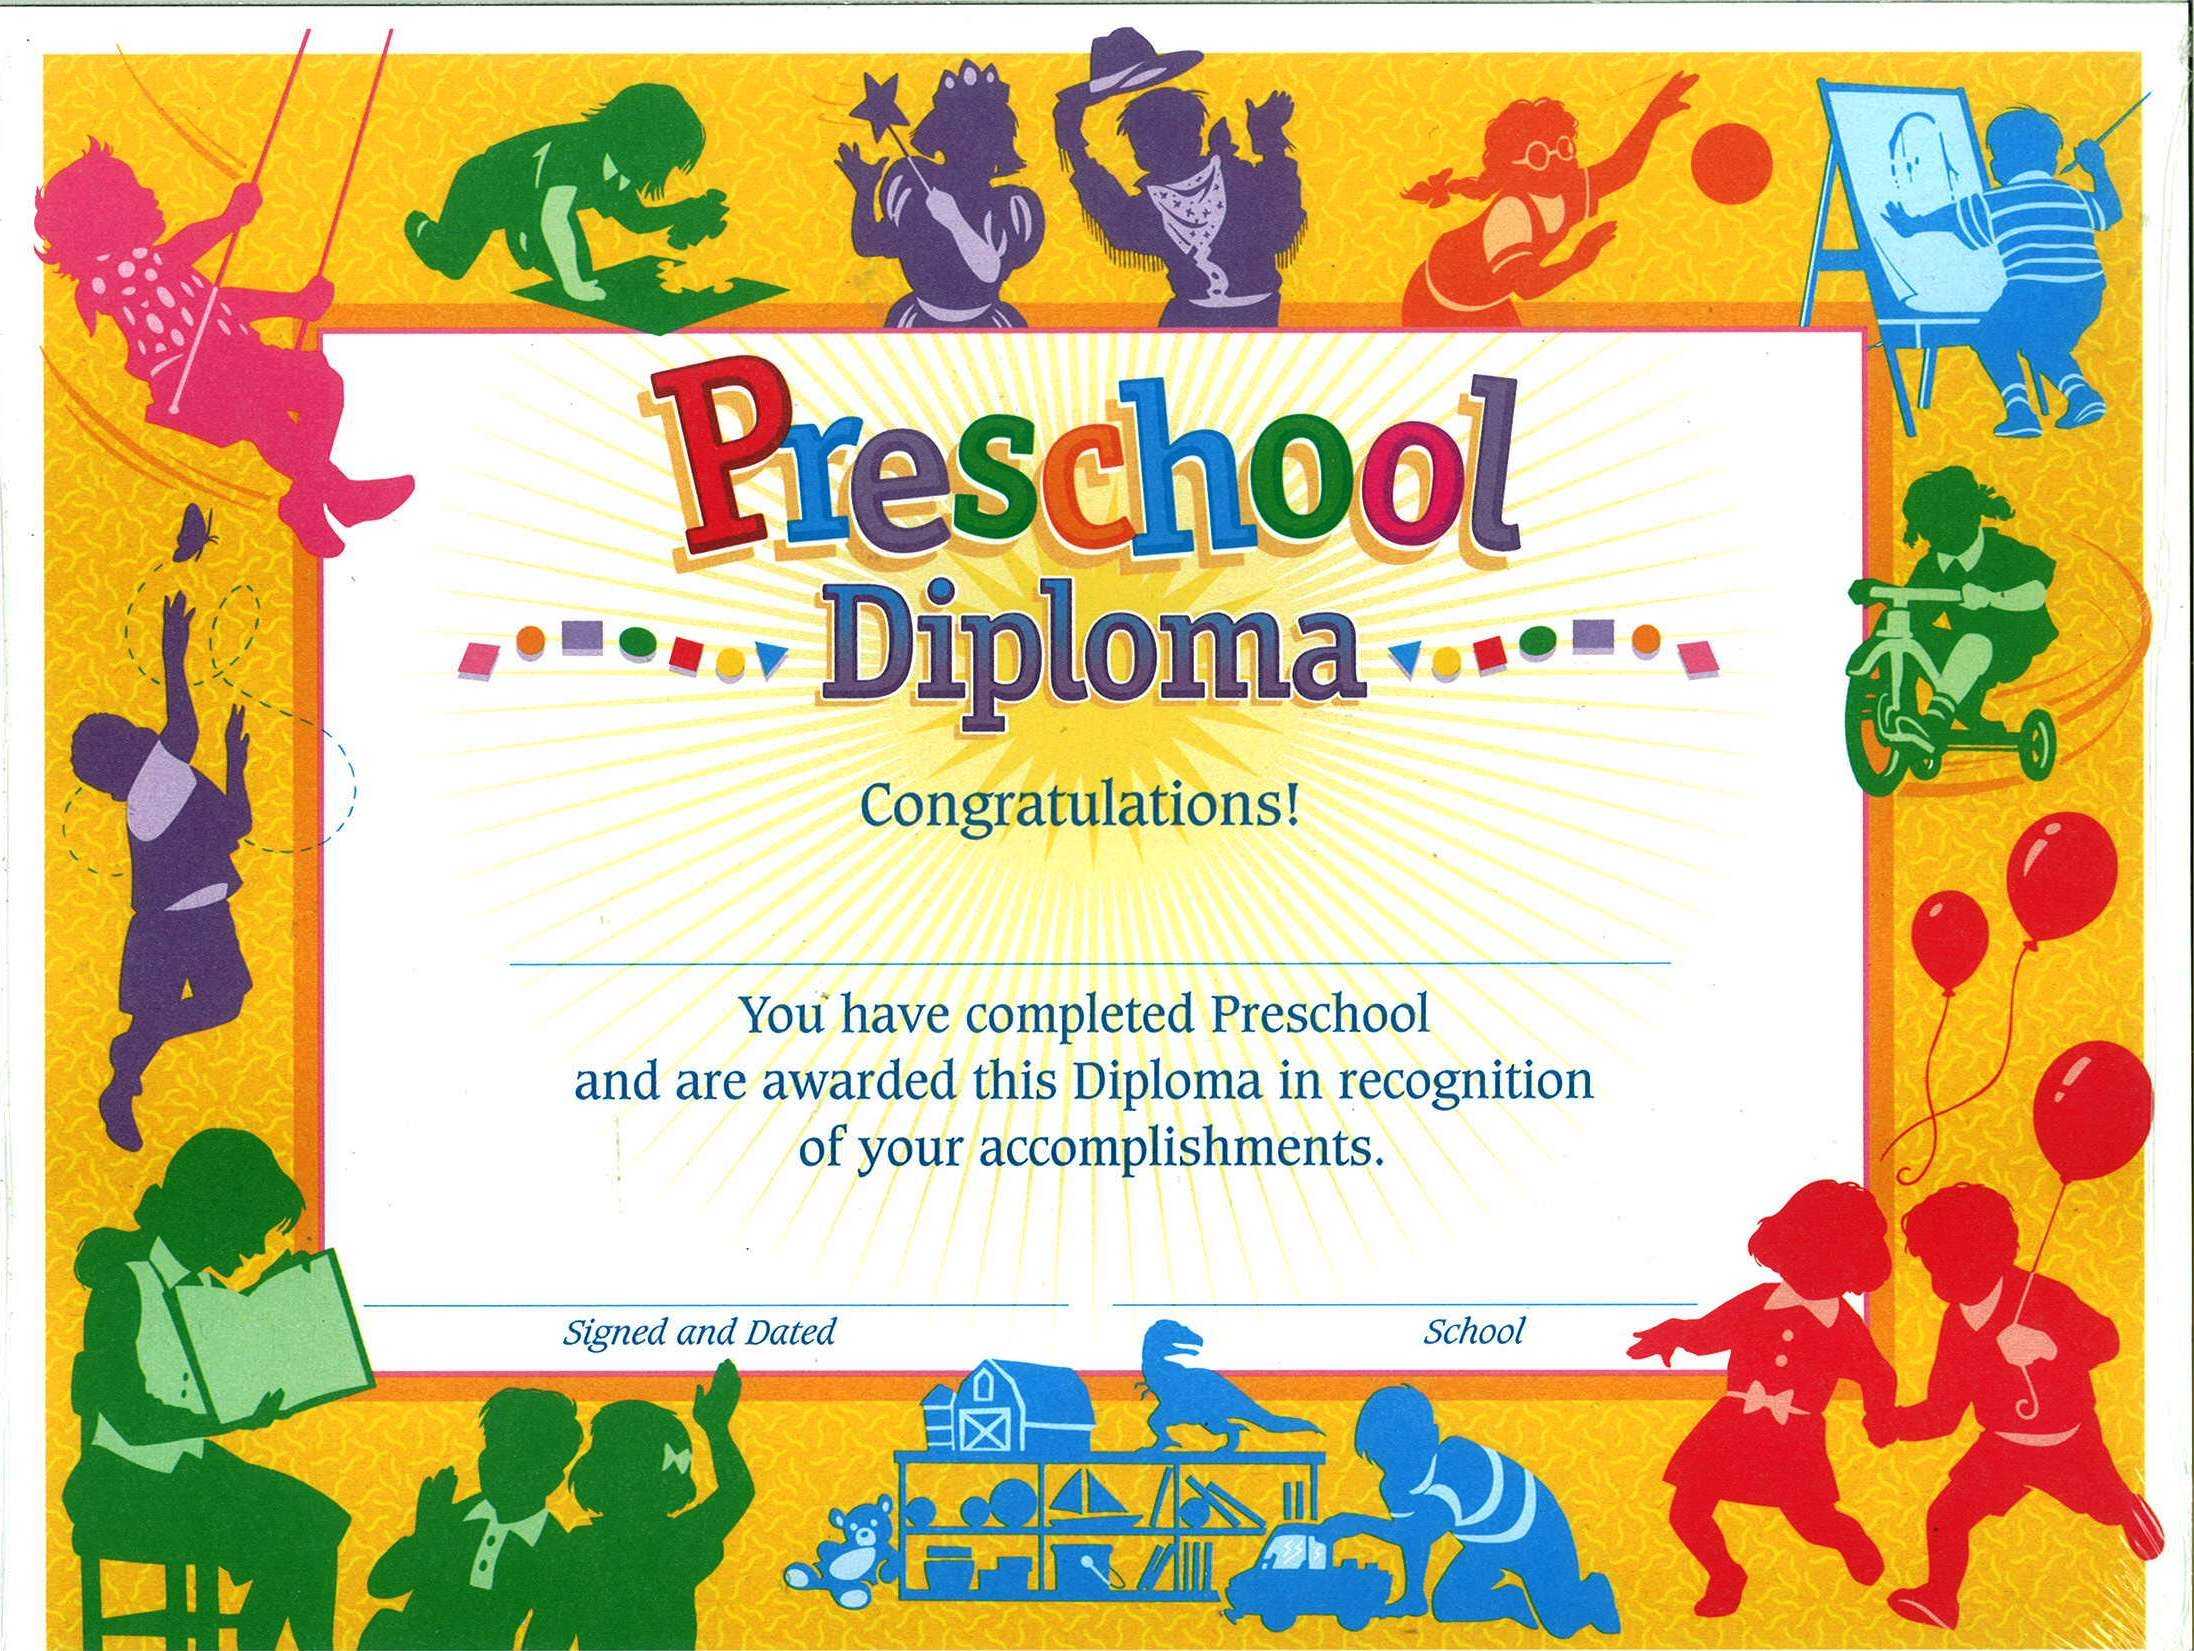 11+ Preschool Certificate Templates – Pdf | Free & Premium Throughout Preschool Graduation Certificate Template Free